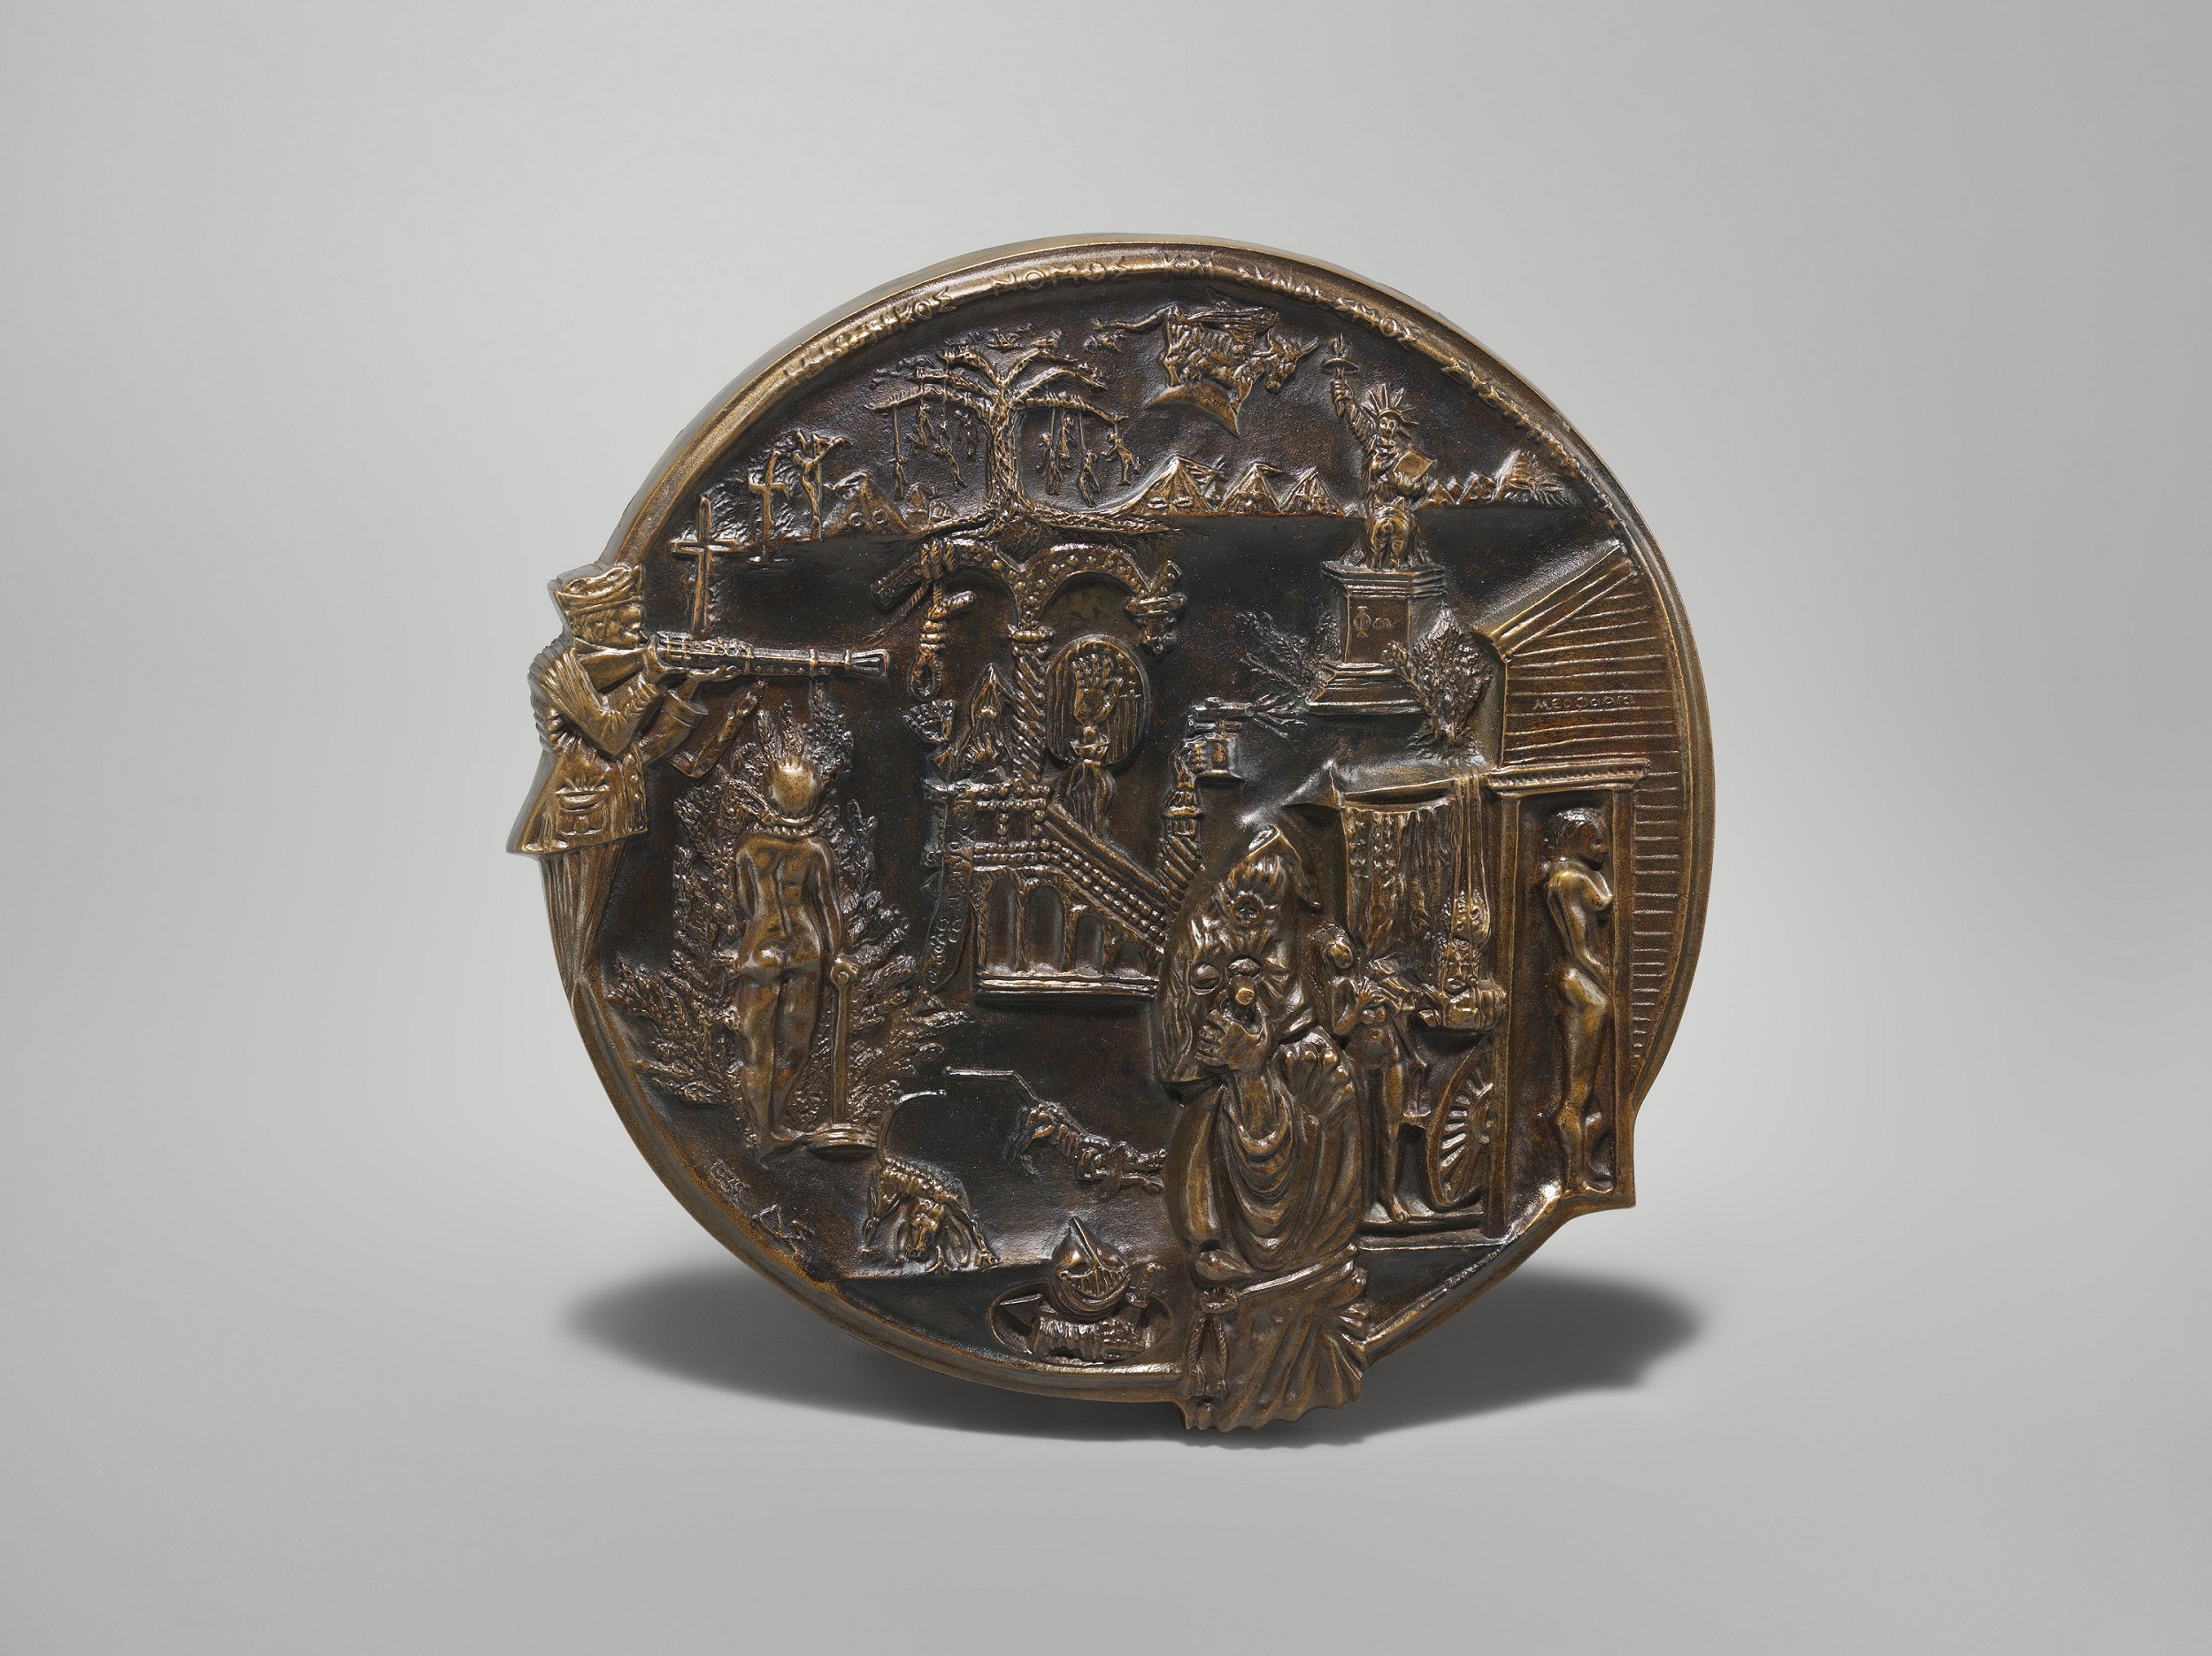 circular bronze medal featuring images of war